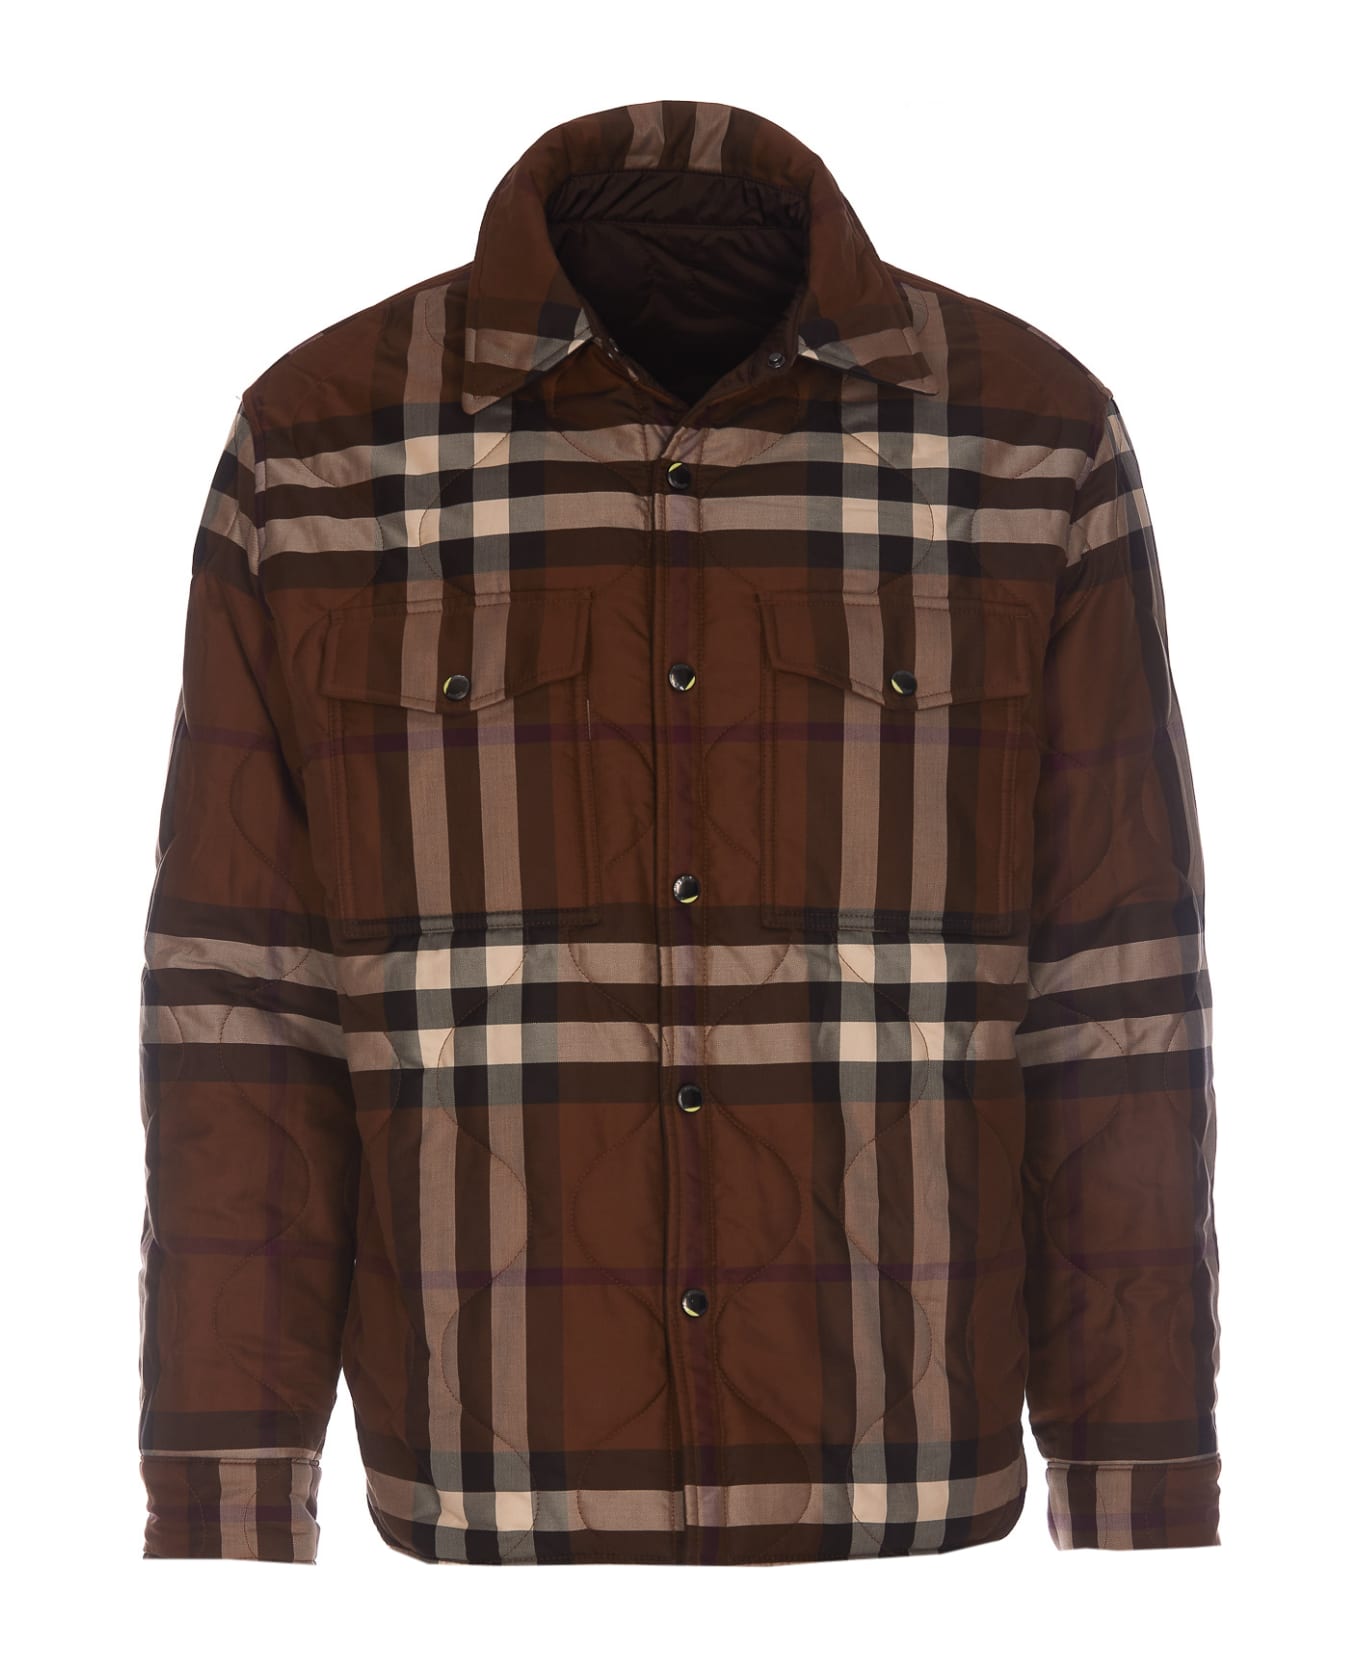 Burberry Reverse Collam Jacket - Dark Truffle Brown